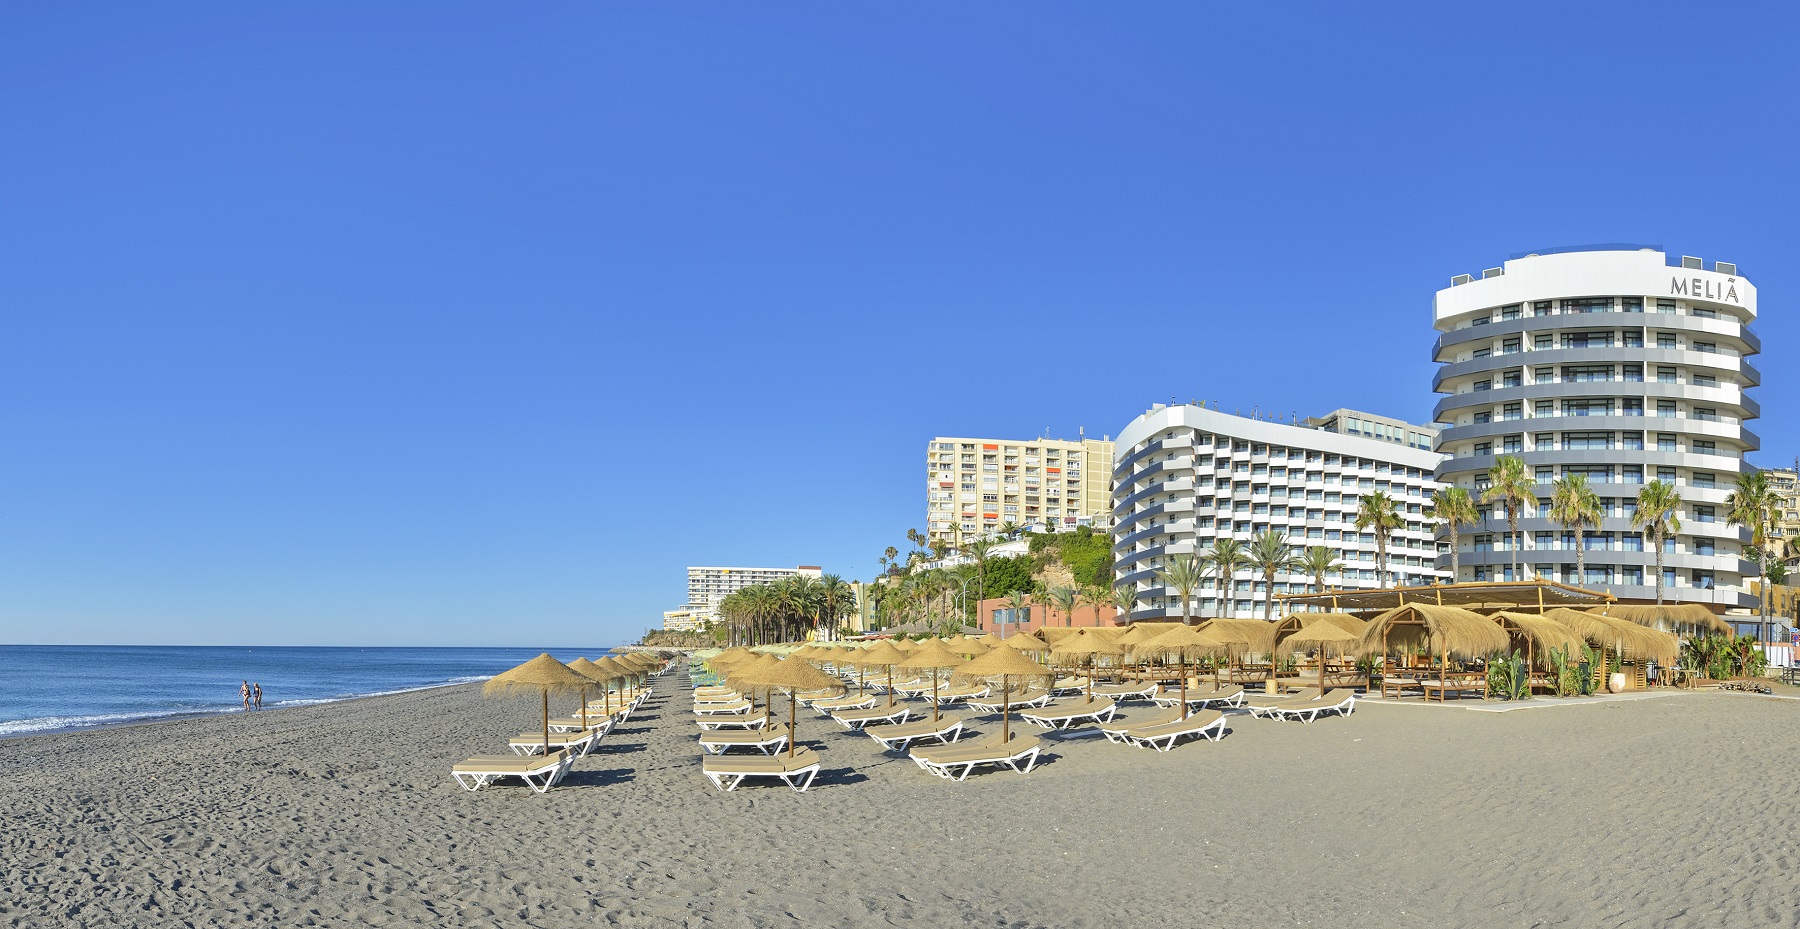 Hotel Melia Costa del Sol Beach